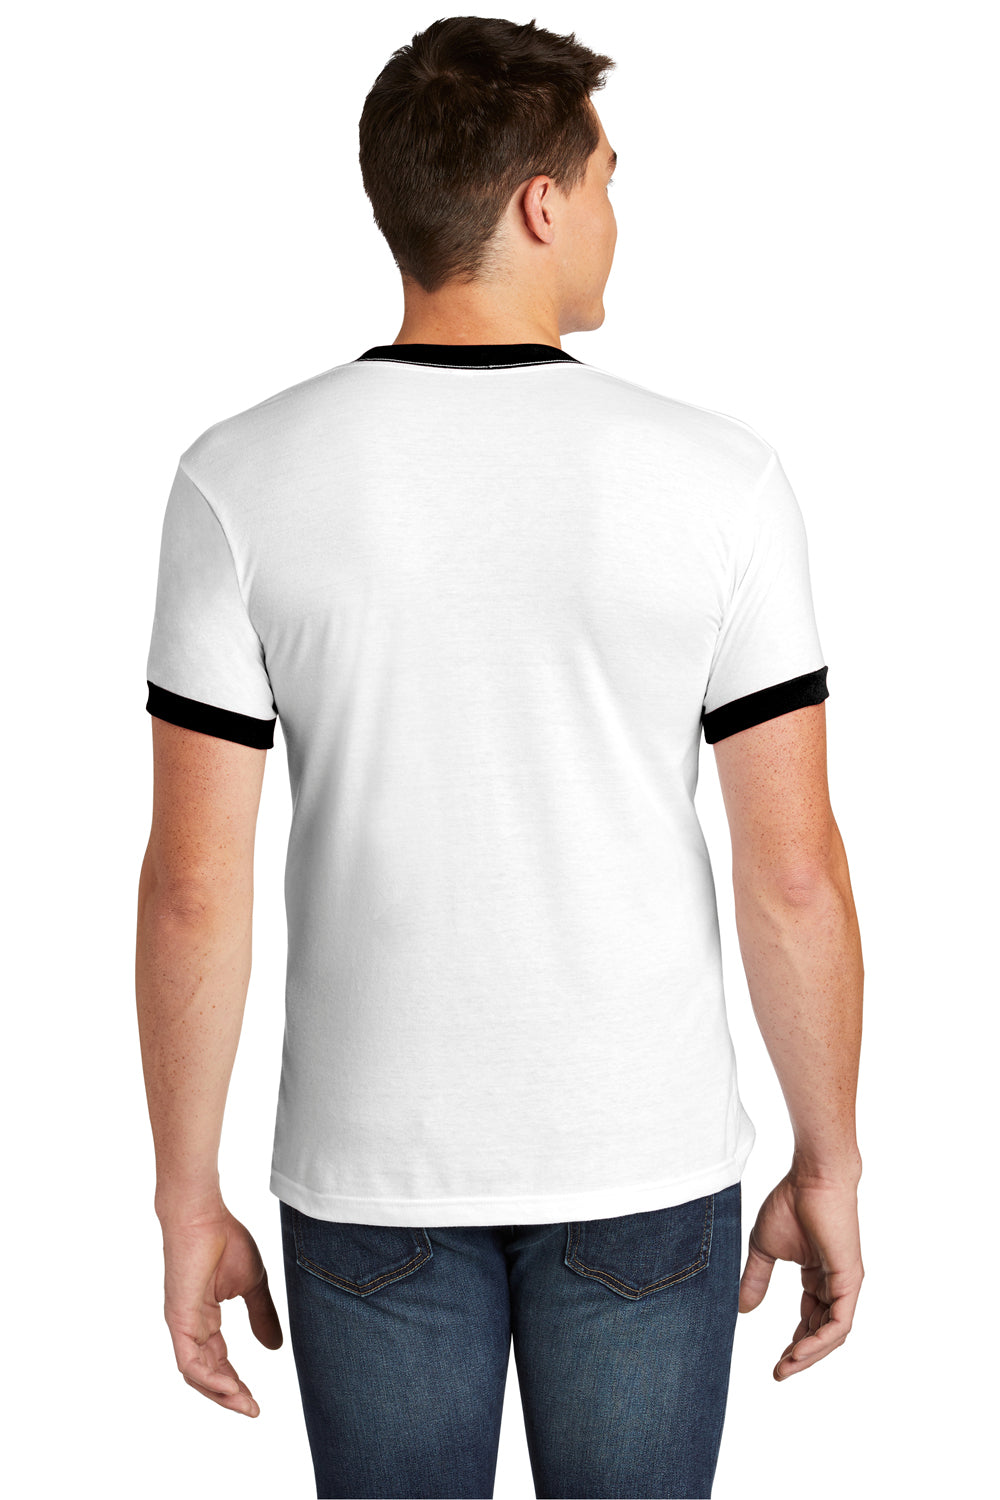 American Apparel 2410W Mens Fine Jersey Short Sleeve Crewneck T-Shirt White/Black Back